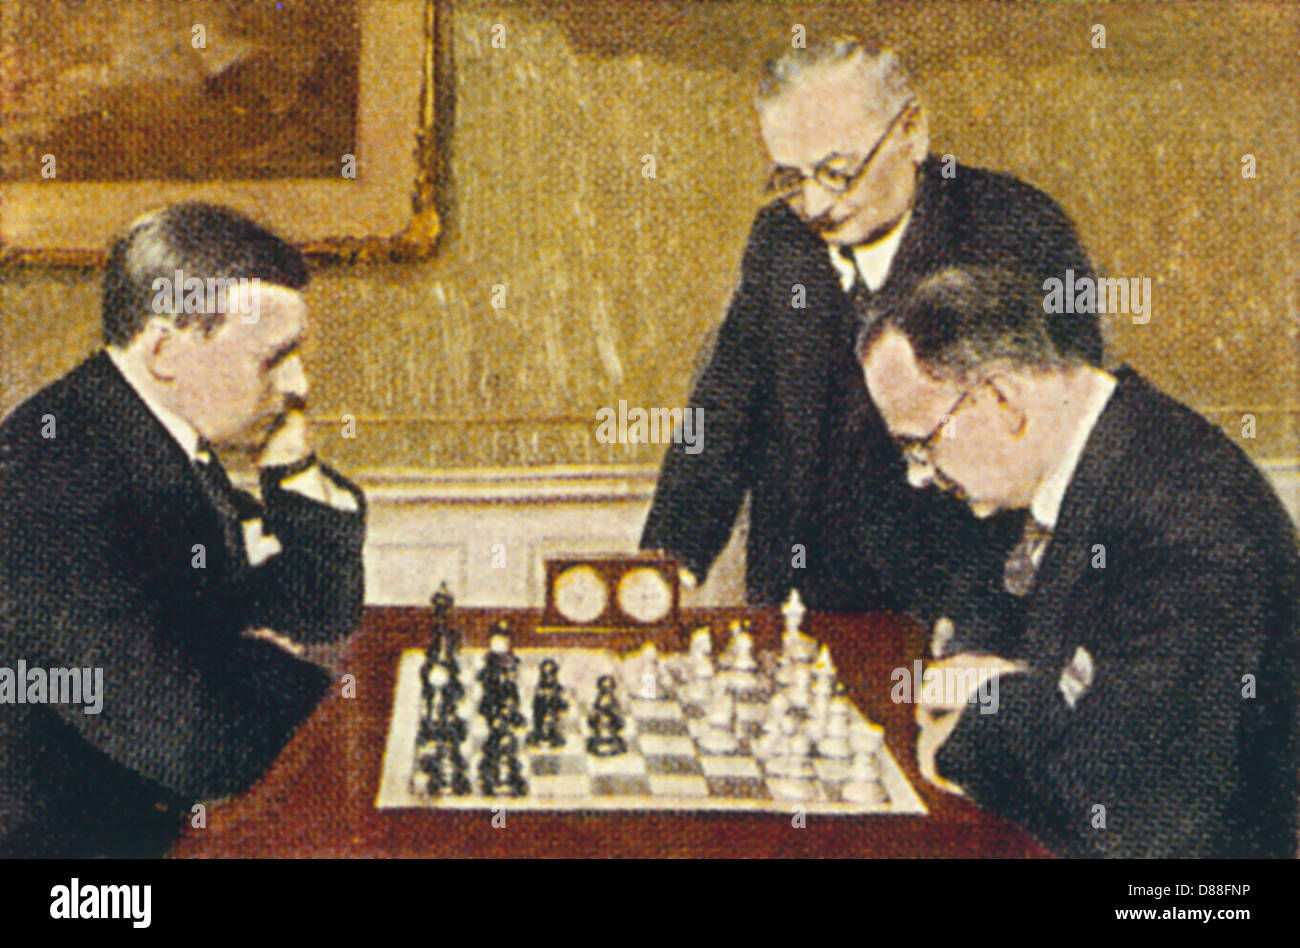 Alexander Alekhine vs Jose Raul Capablanca (1914)